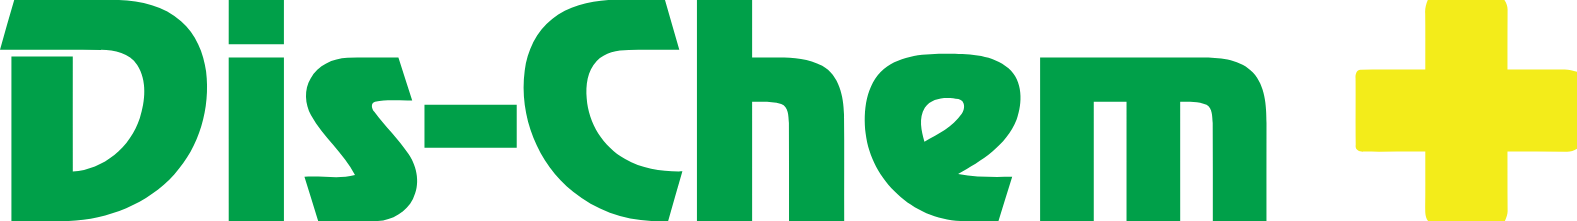 Dis-Chem Pharmacies logo large (transparent PNG)